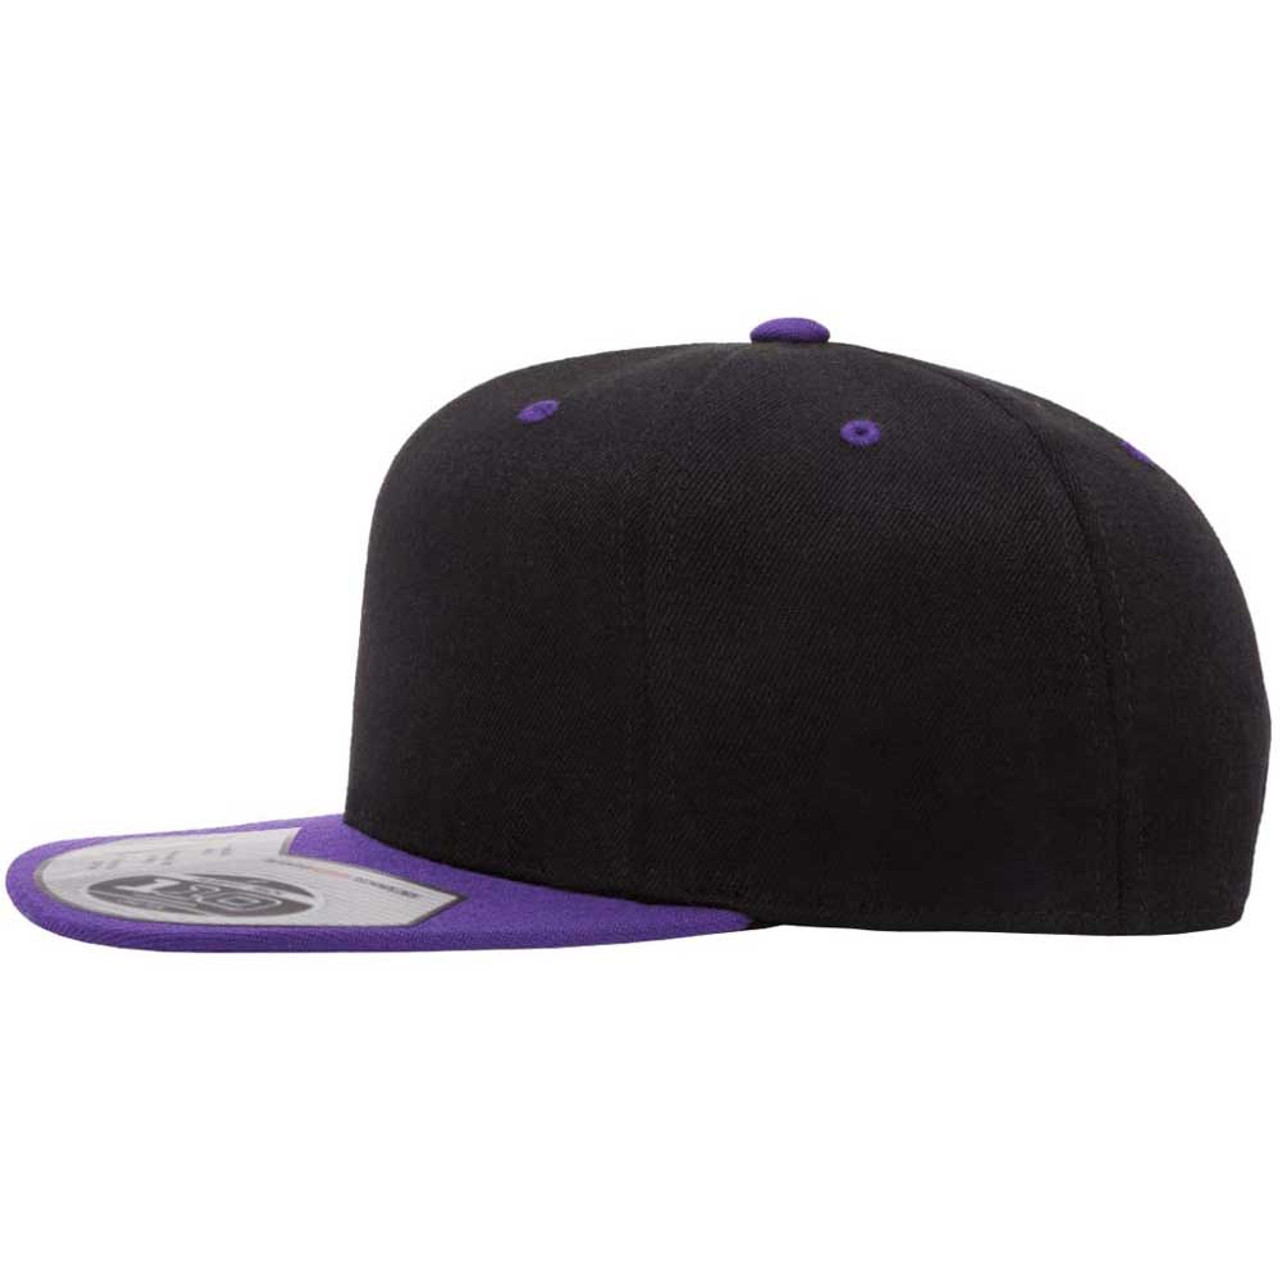 | Jac 110® - The Hat One Flexfit Dozen 2-Tone Cap Premium Snapback